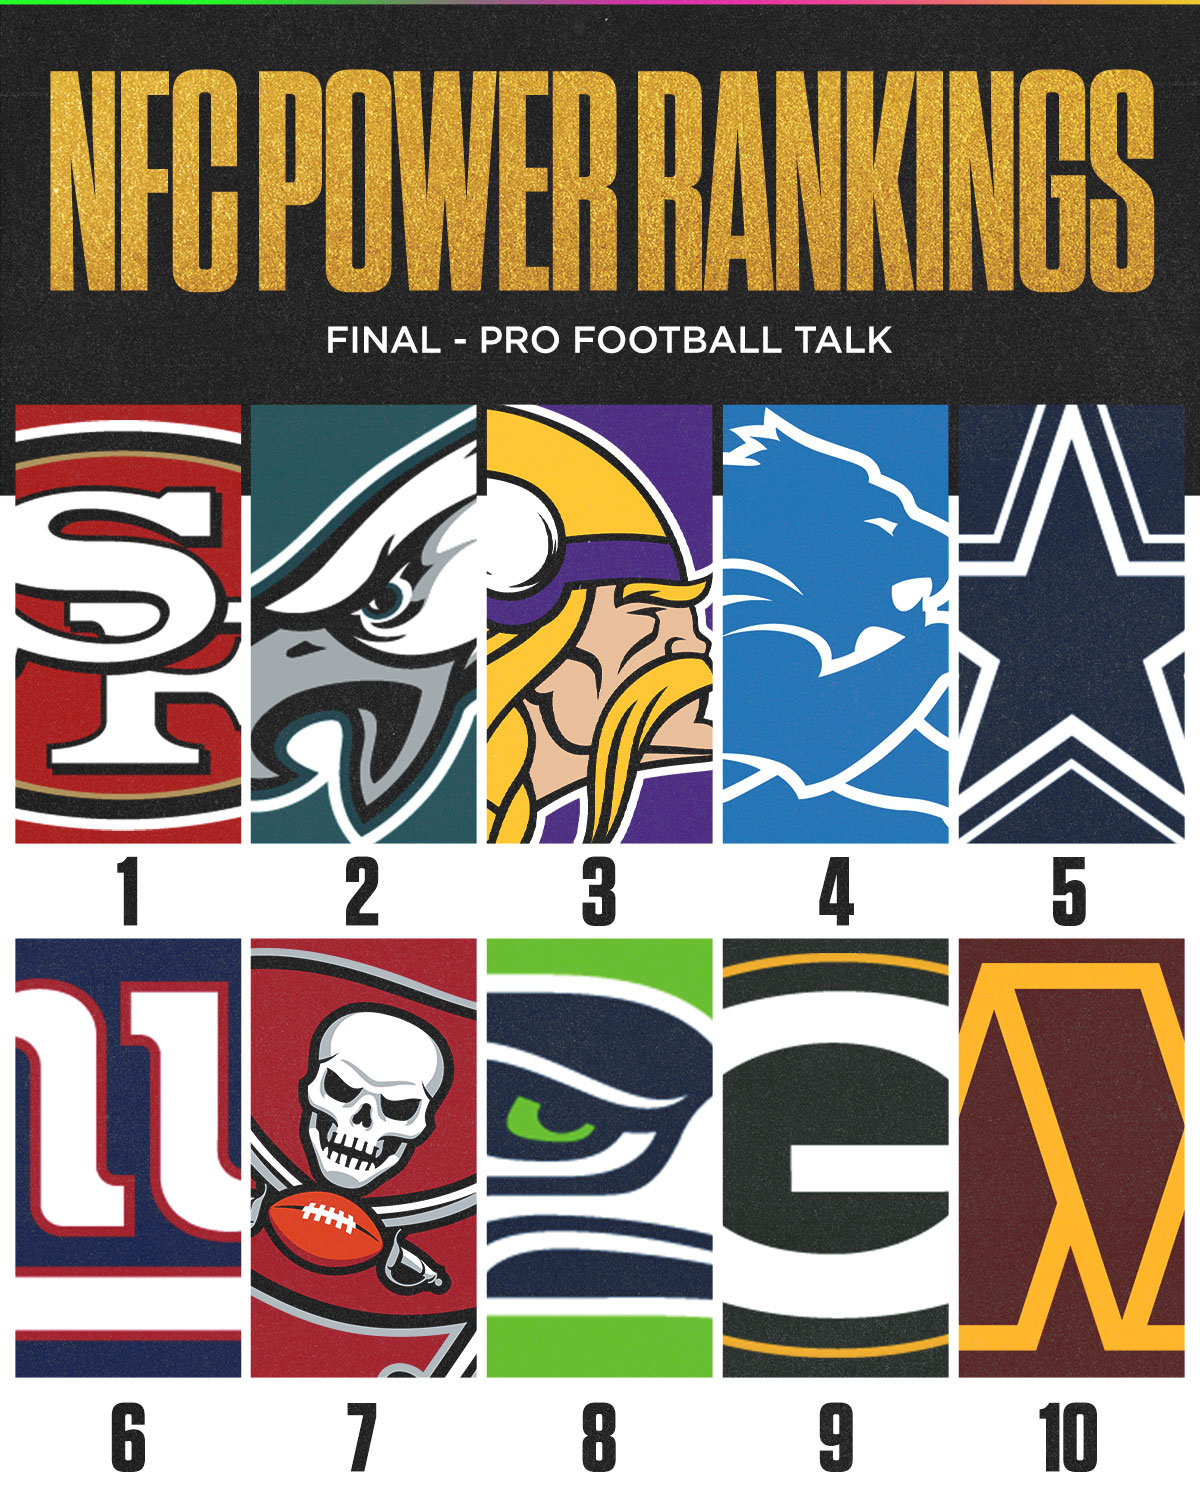 Sunday Night Football on NBC on X: 'The FINAL NFC power rankings